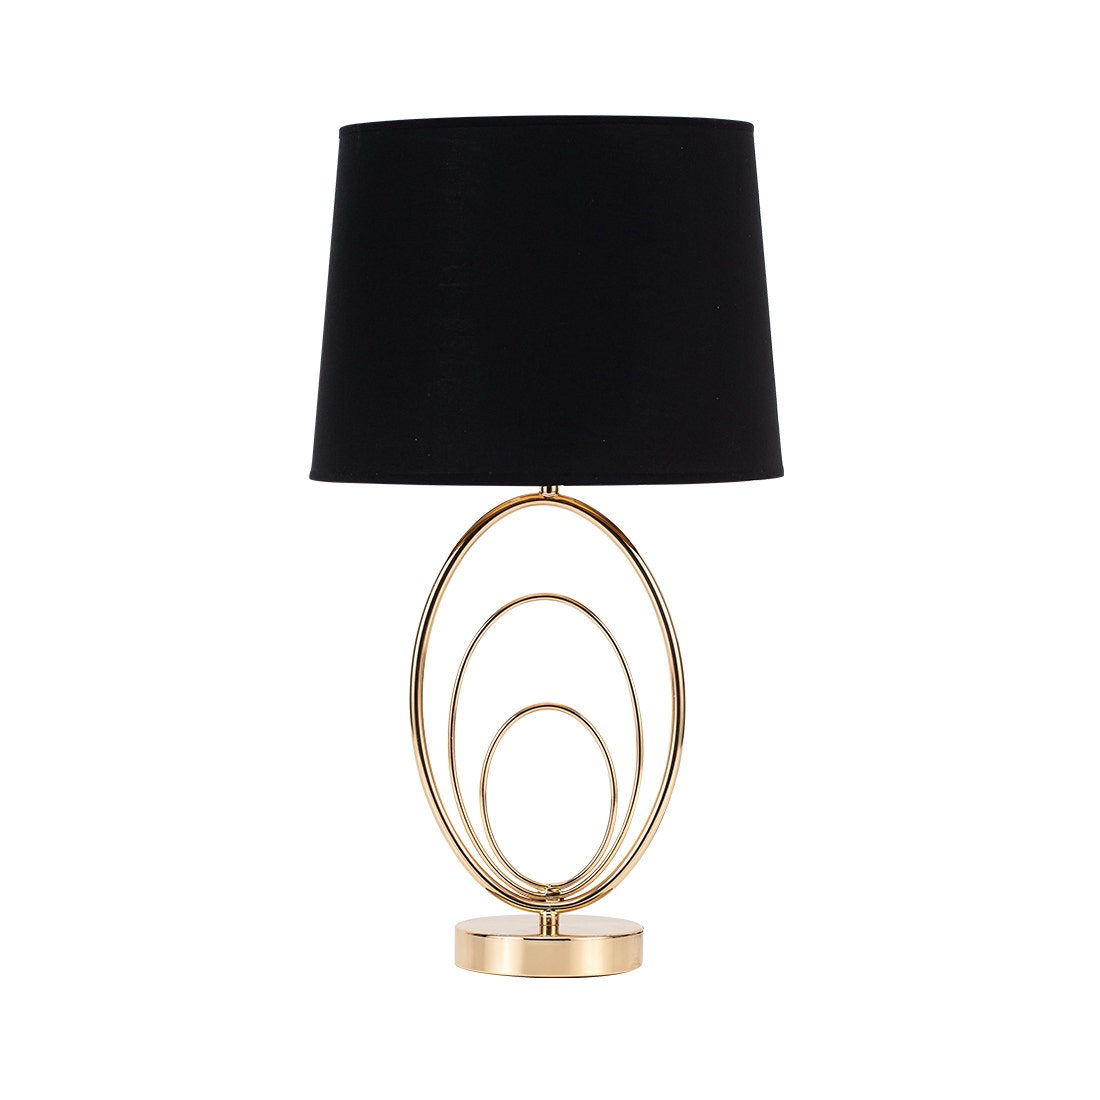 LS TABLE LAMP#JM8085 GOLD / BLACK LANTERN